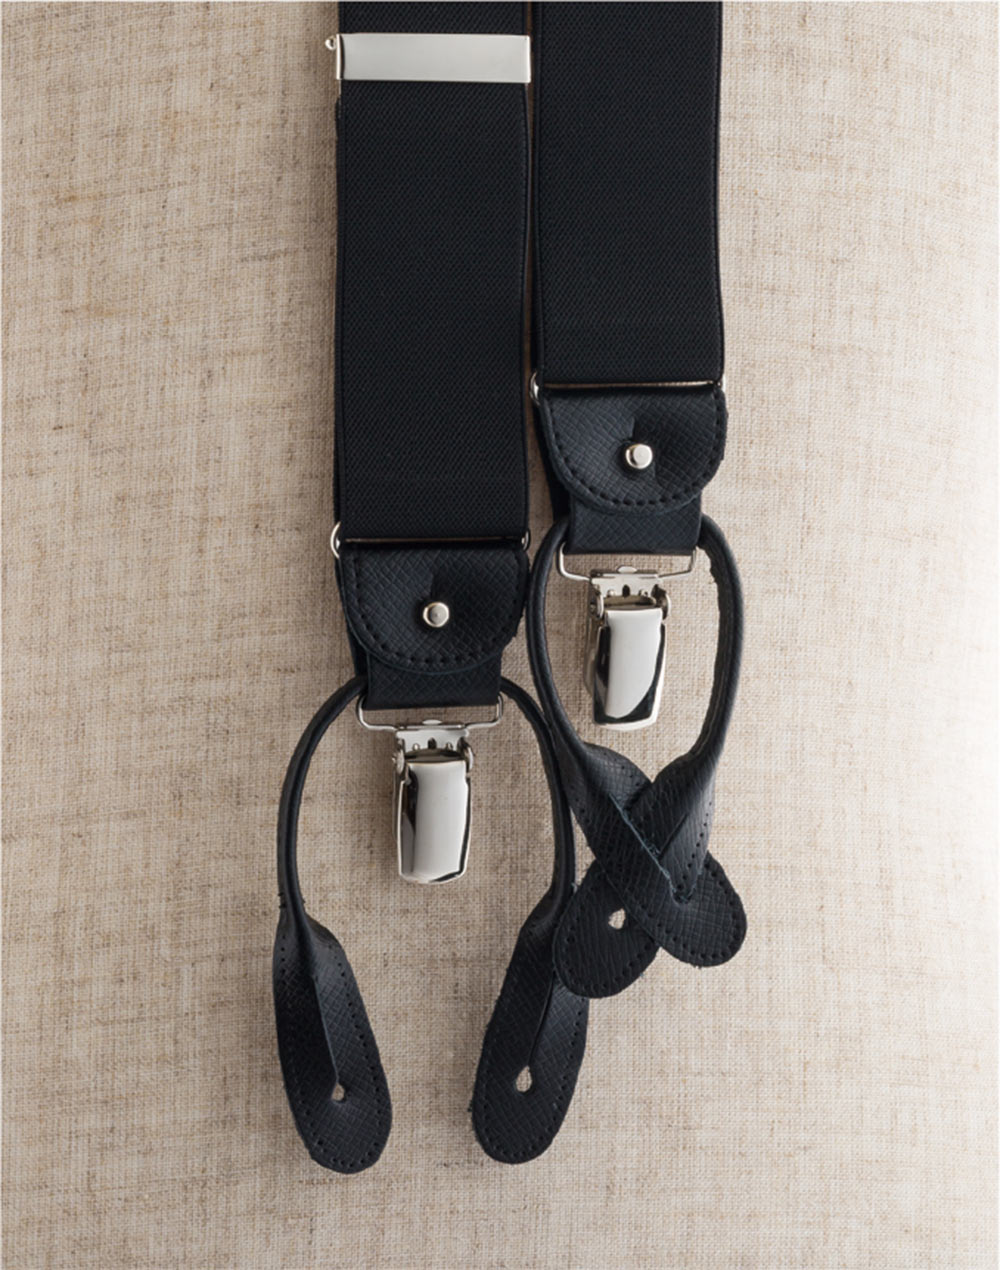 AT-BLACK Albert Thurston Suspenders No Pattern Black 2way Type[Formal Accessories] ALBERT THURSTON